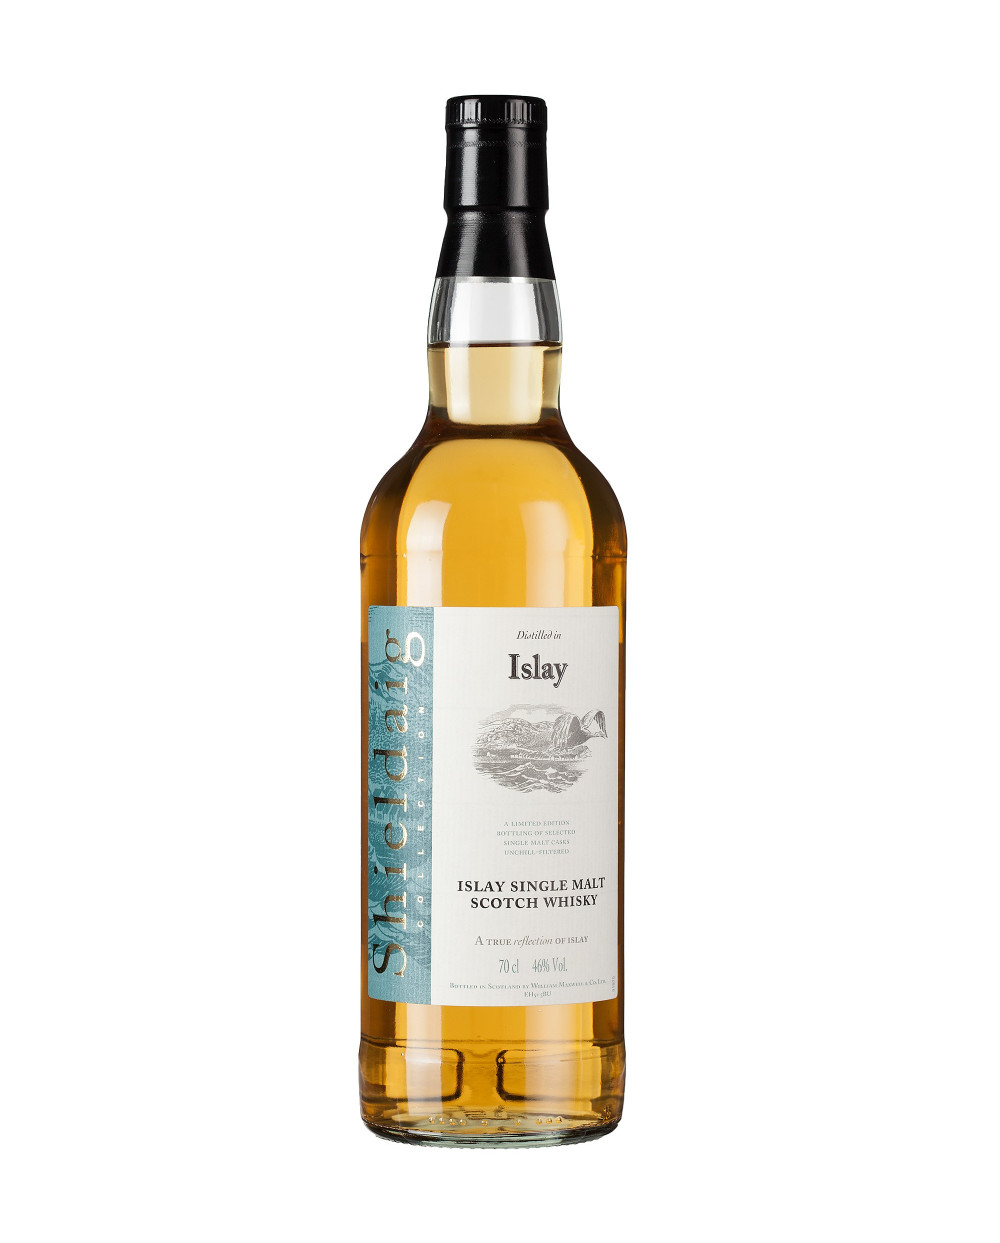 Shieldaig Islay Single Malt Scotch Whisky